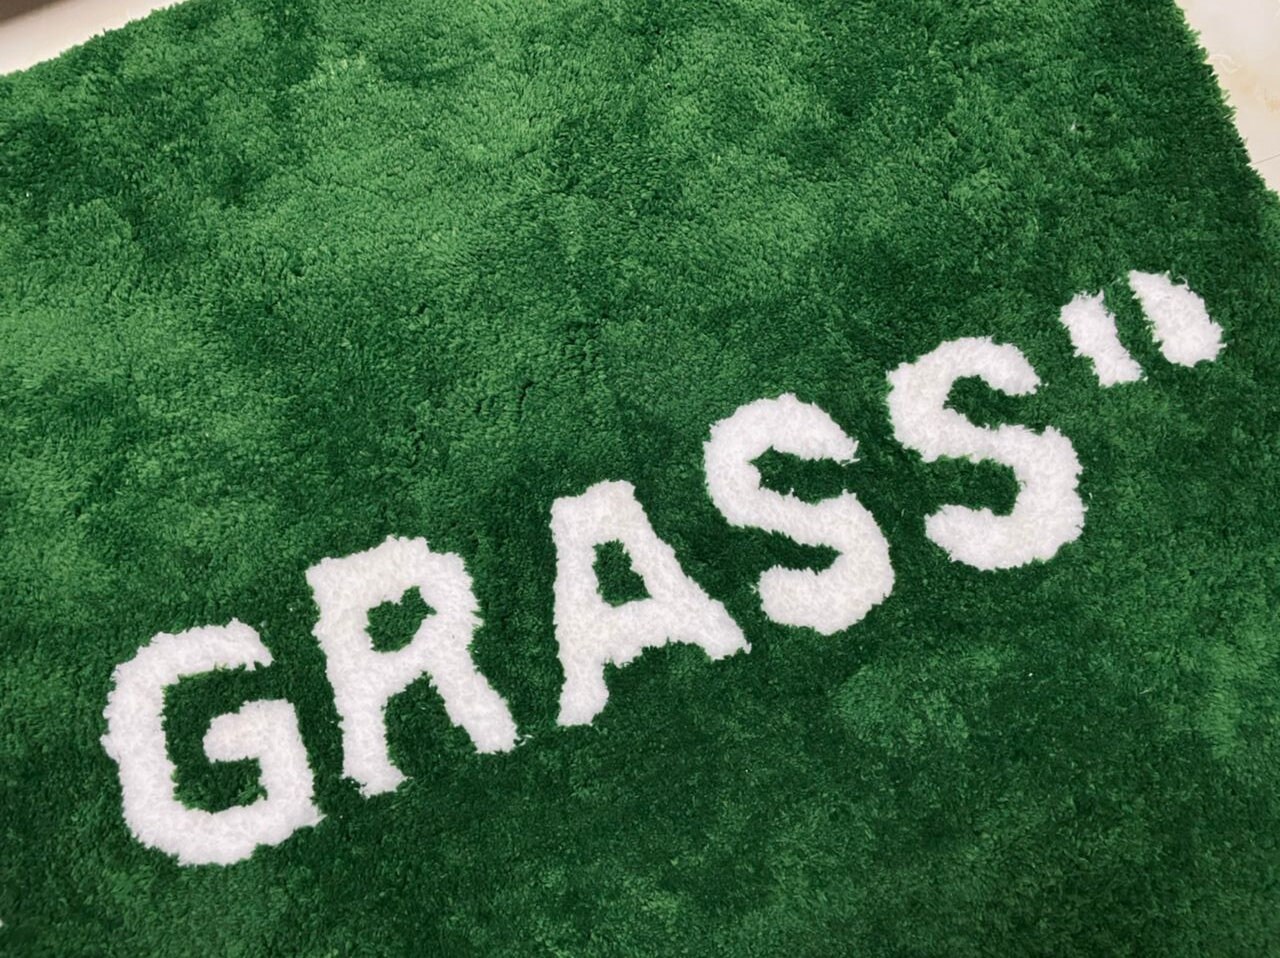 Wet Grass Rug Custom Hypebeast Carpet fedex Shipping | Etsy